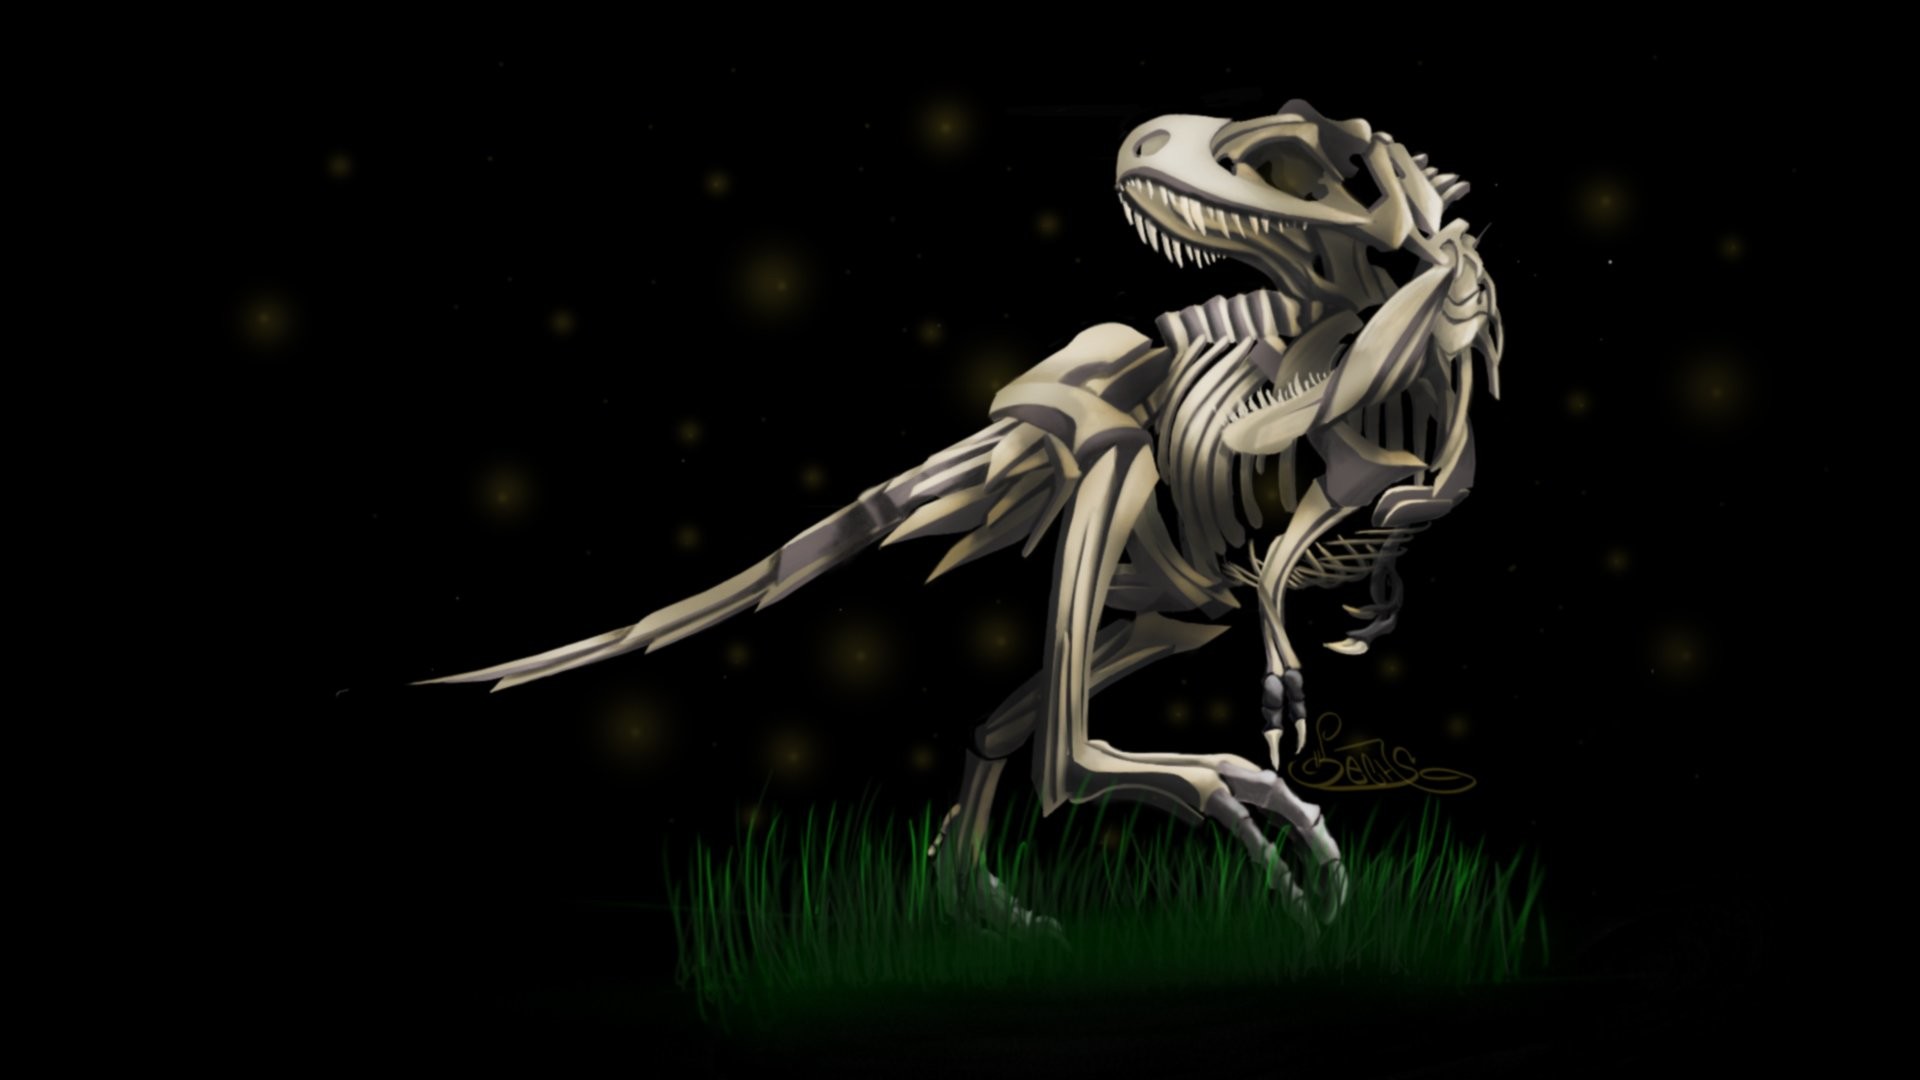 Dinosaurs Skeletons Tyrannosaurus Rex Wallpaper 1920x1080 309492 Wallpaperup 1920x1080